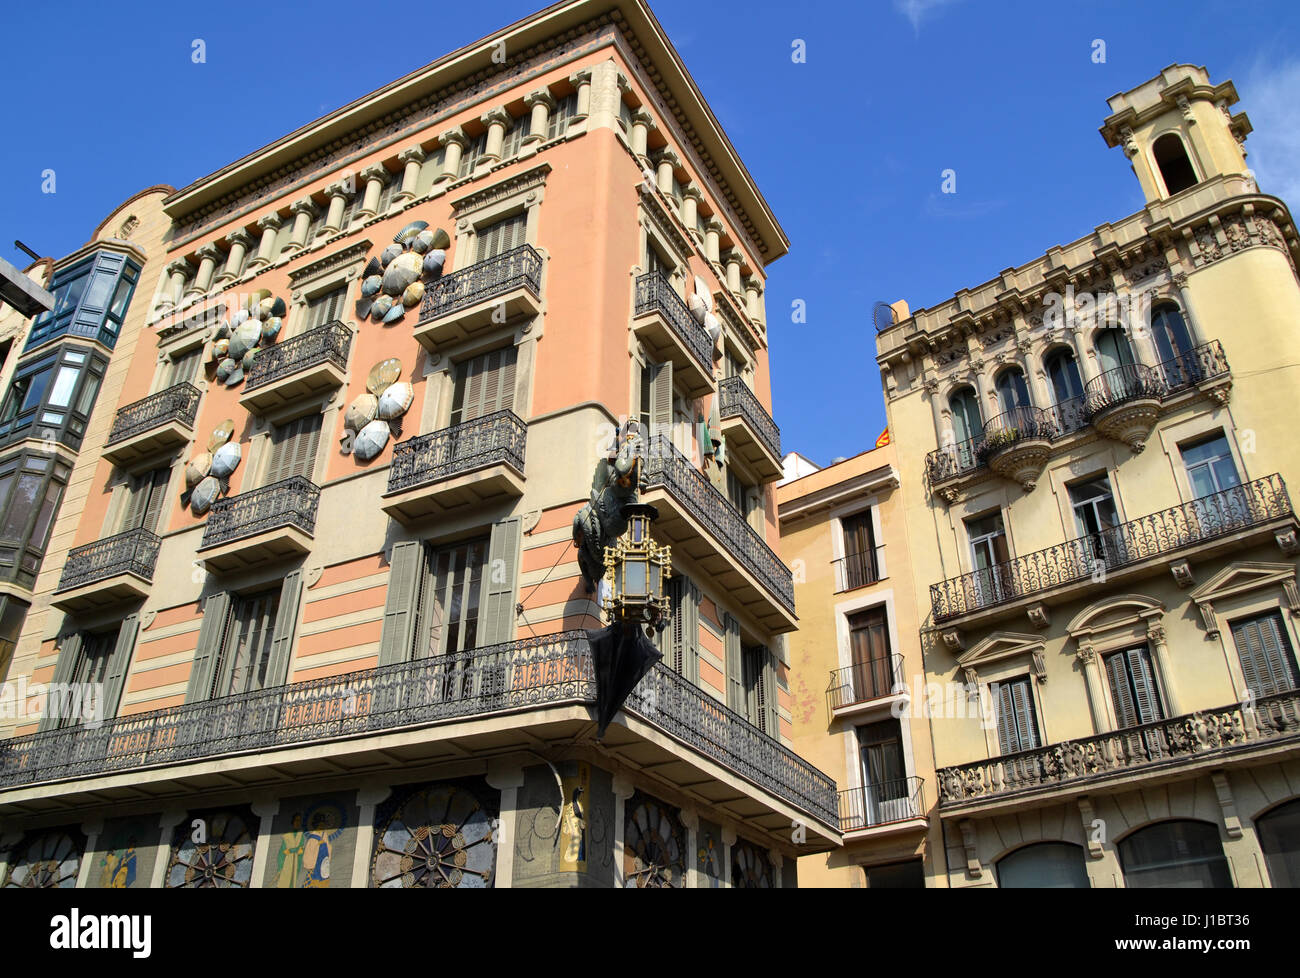 Casa de paraguas barcelona fotografías e imágenes de alta resolución - Alamy